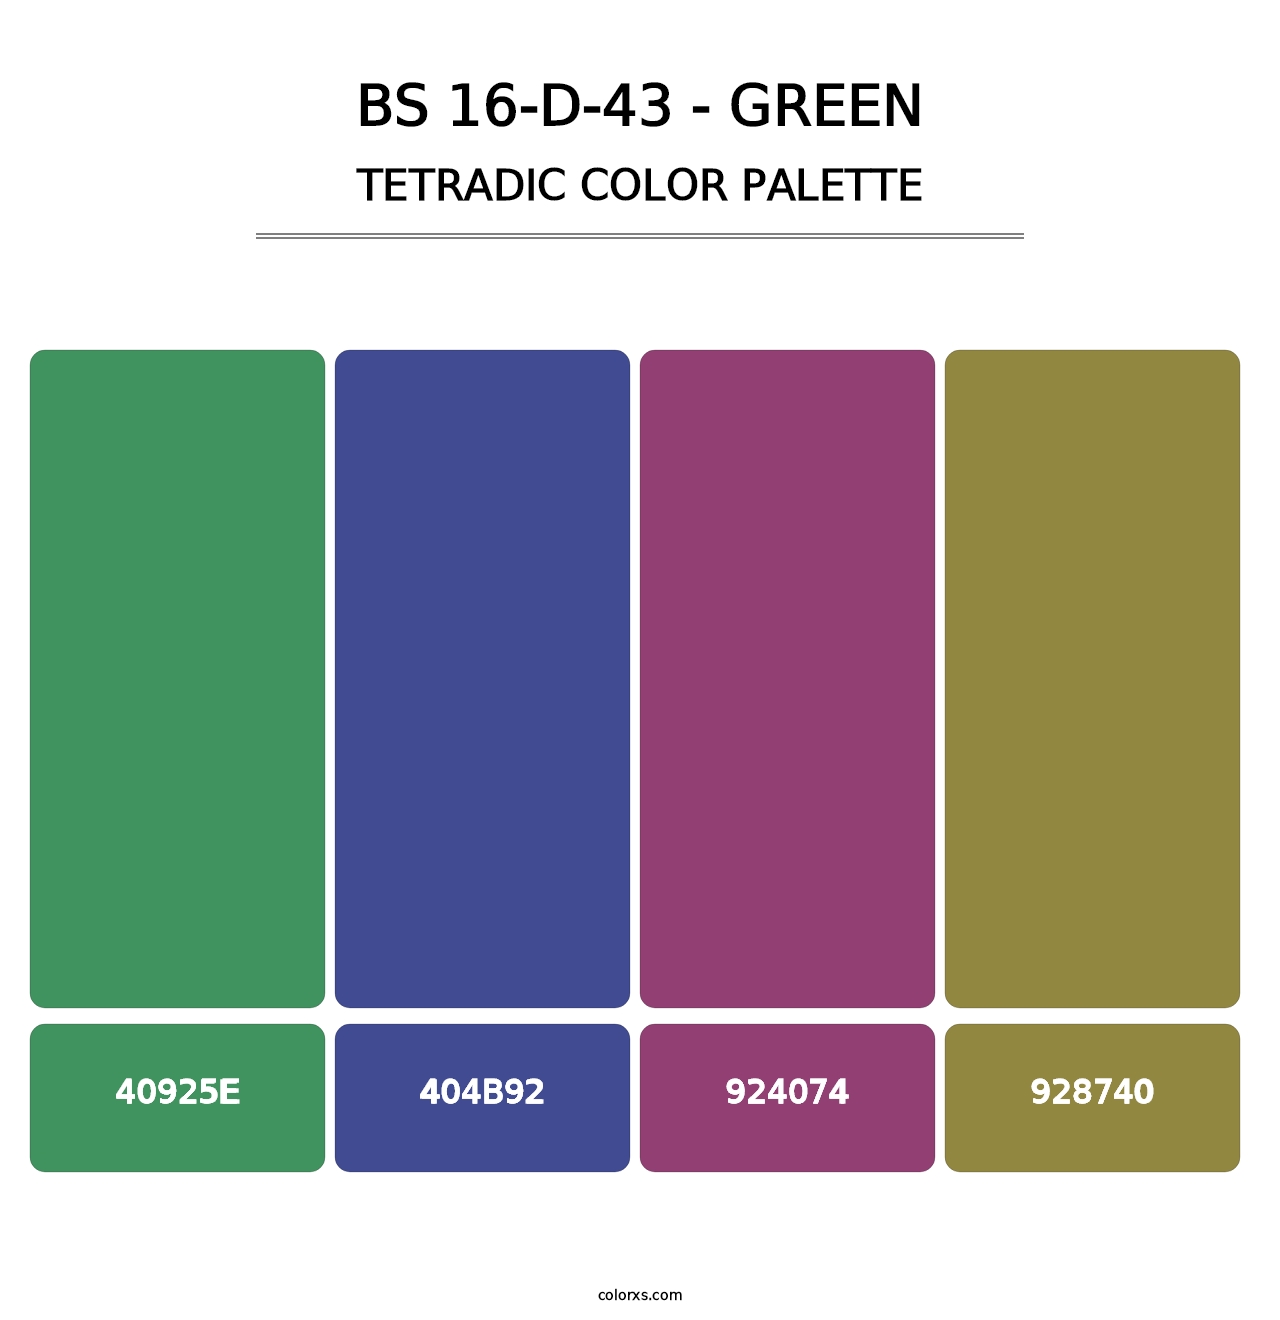 BS 16-D-43 - Green - Tetradic Color Palette